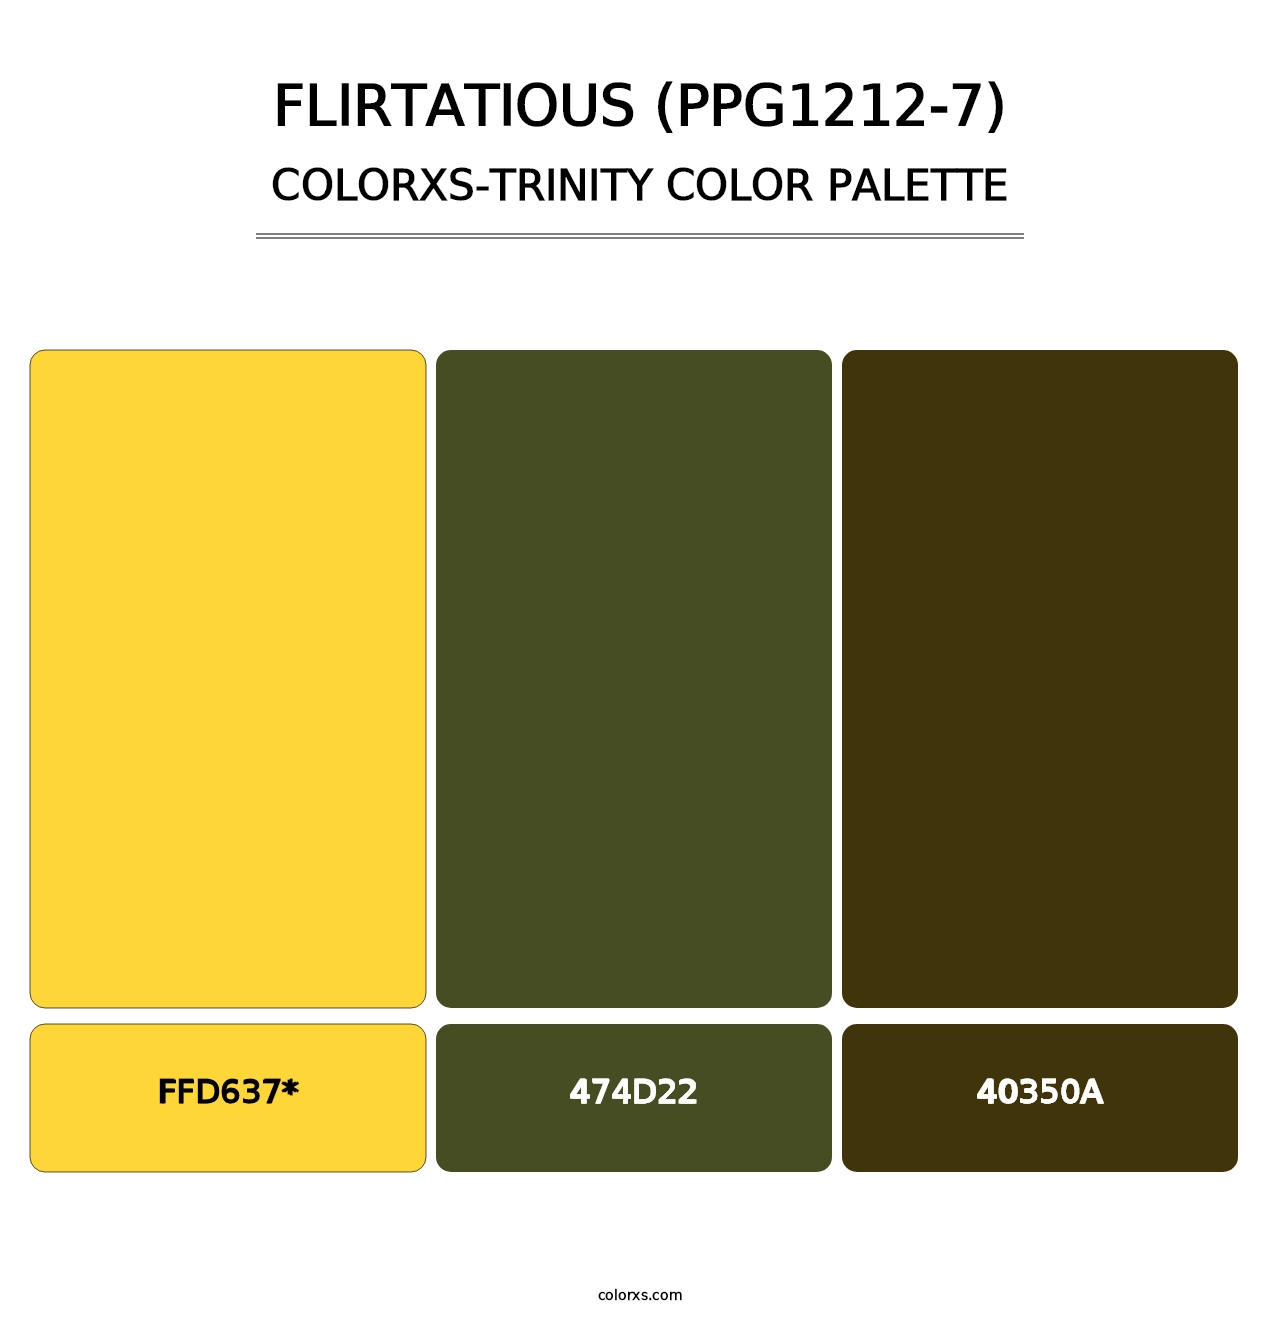 Flirtatious (PPG1212-7) - Colorxs Trinity Palette